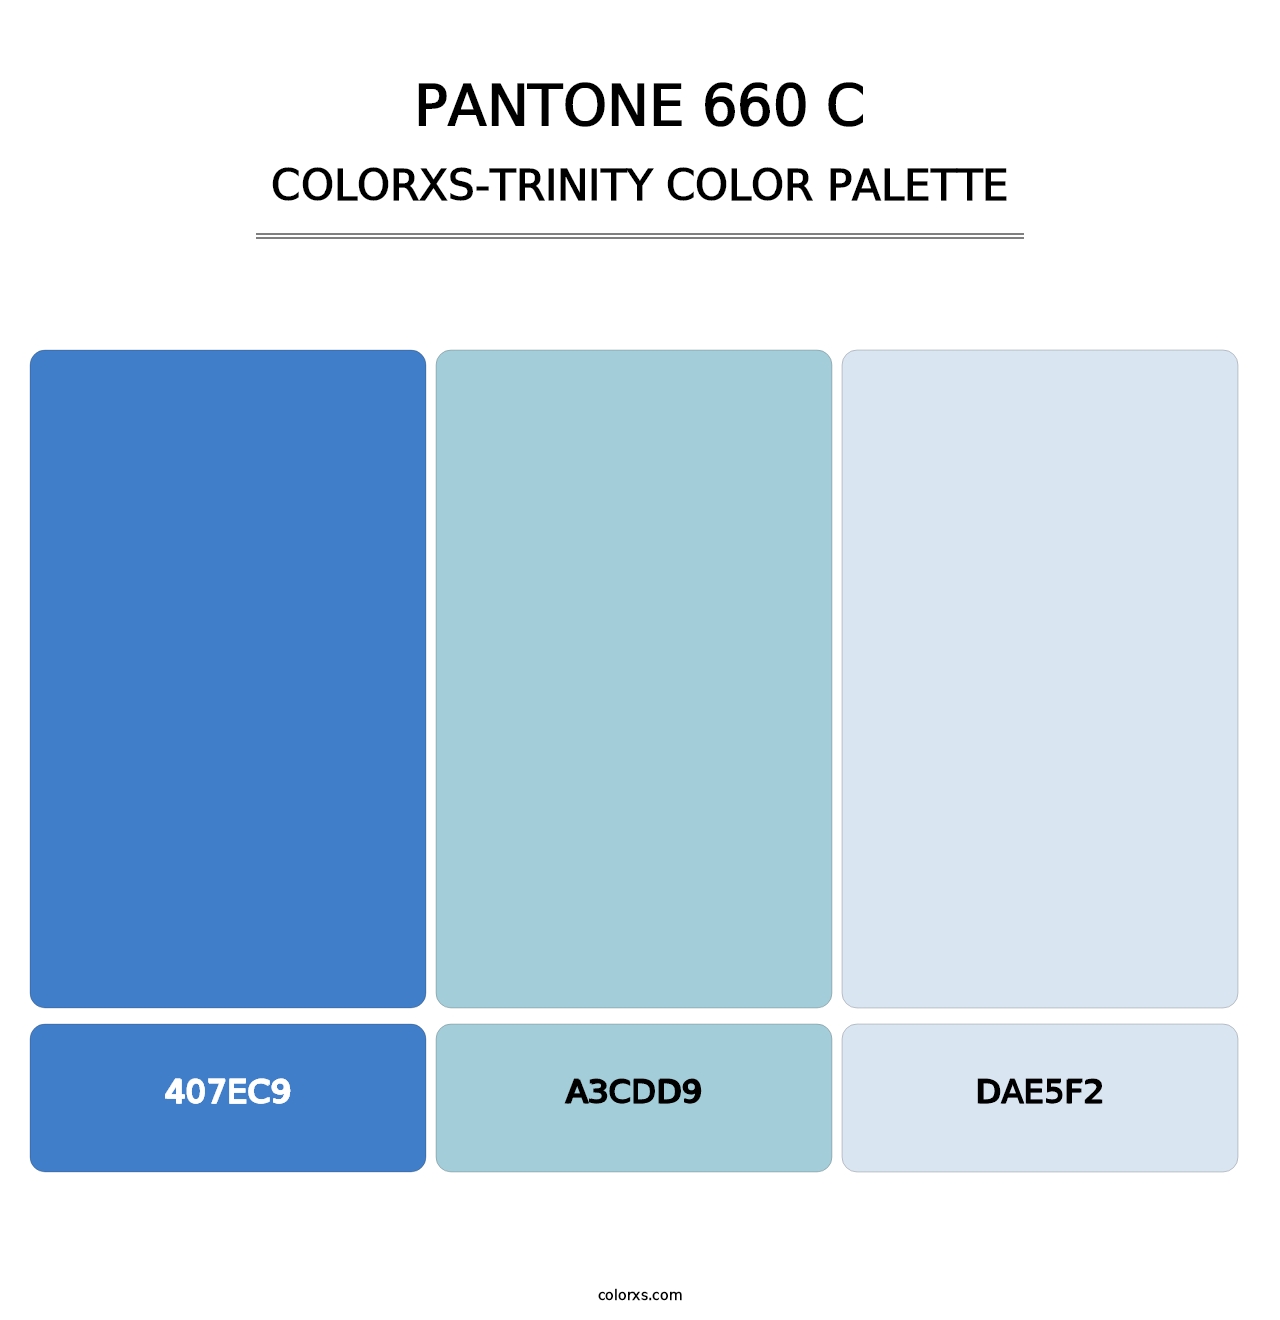 PANTONE 660 C - Colorxs Trinity Palette